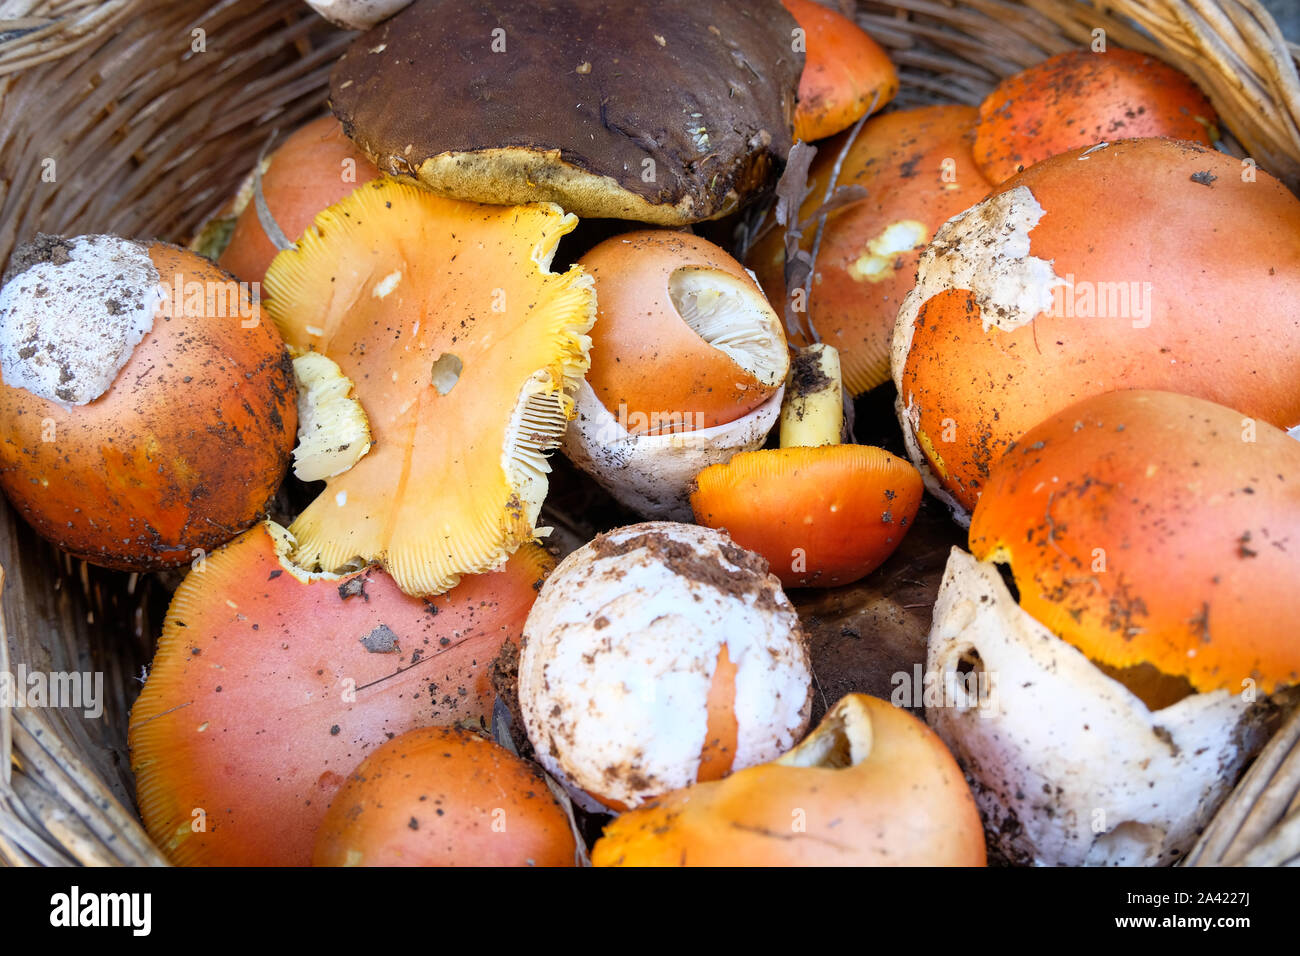 Funghi autunnali composizione. Boletus edulis funghi,ingredienti stagionali Foto Stock